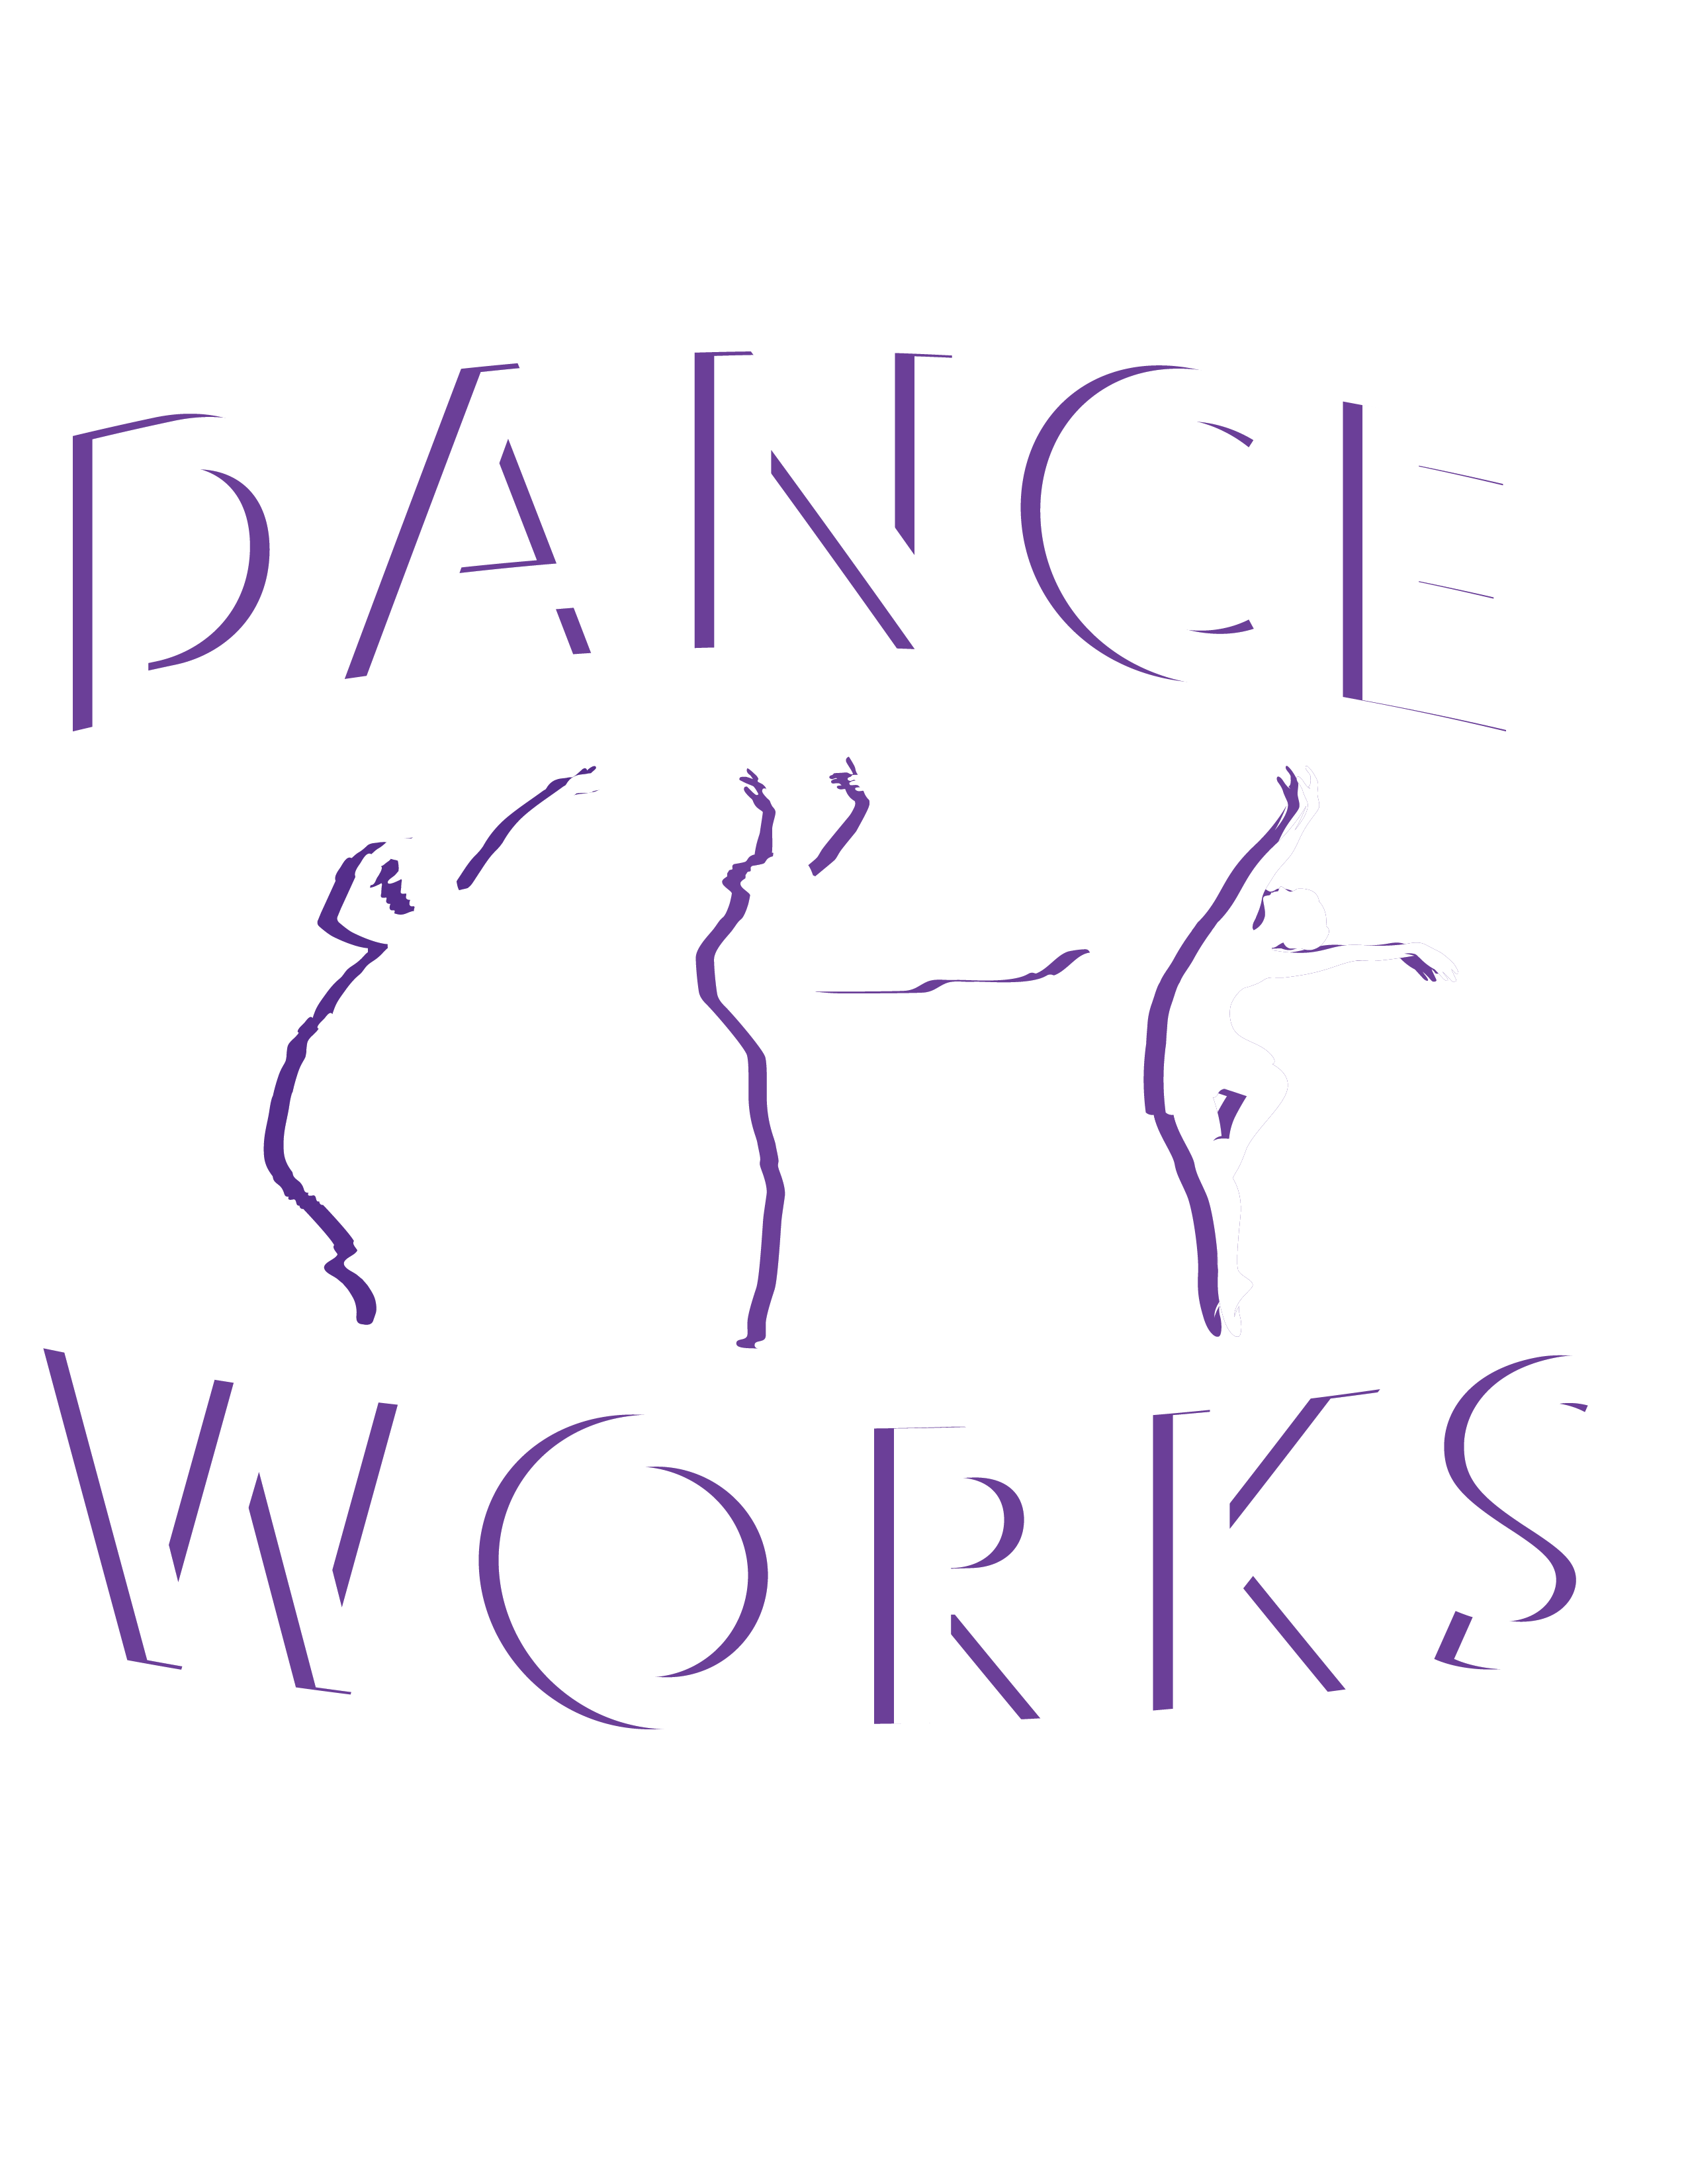 Dance Works